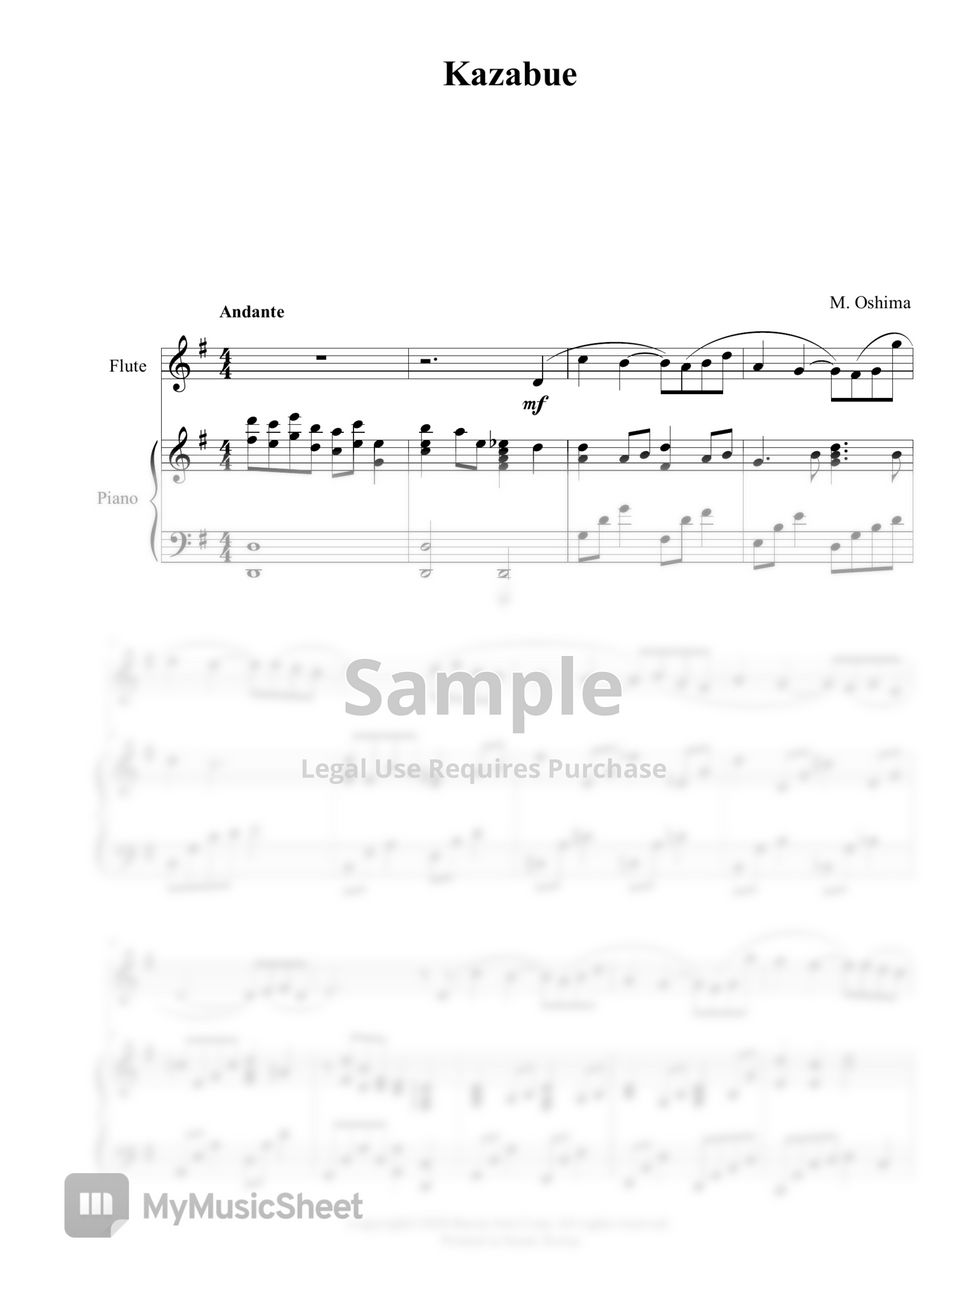 M. Oshima - Kazabue(Flute Solo, Piano) (플룻 솔로) by 바론아트